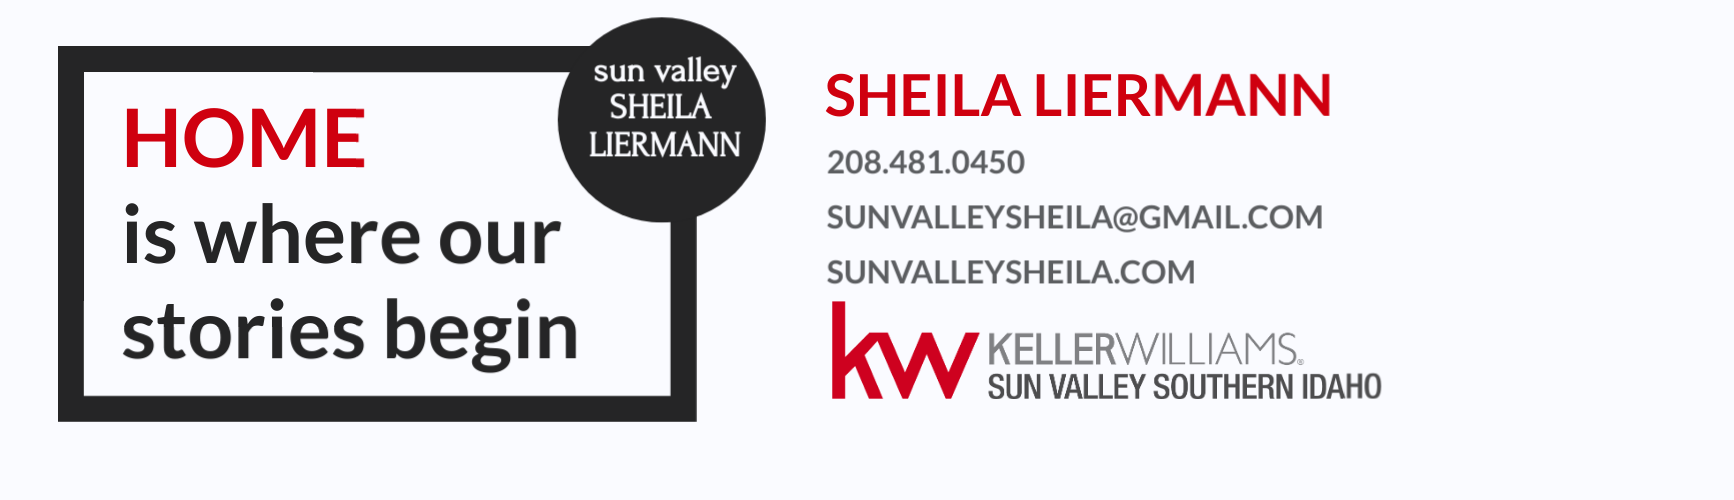 Sheila Liermann sells real estate in Sun Valley, Idaho 